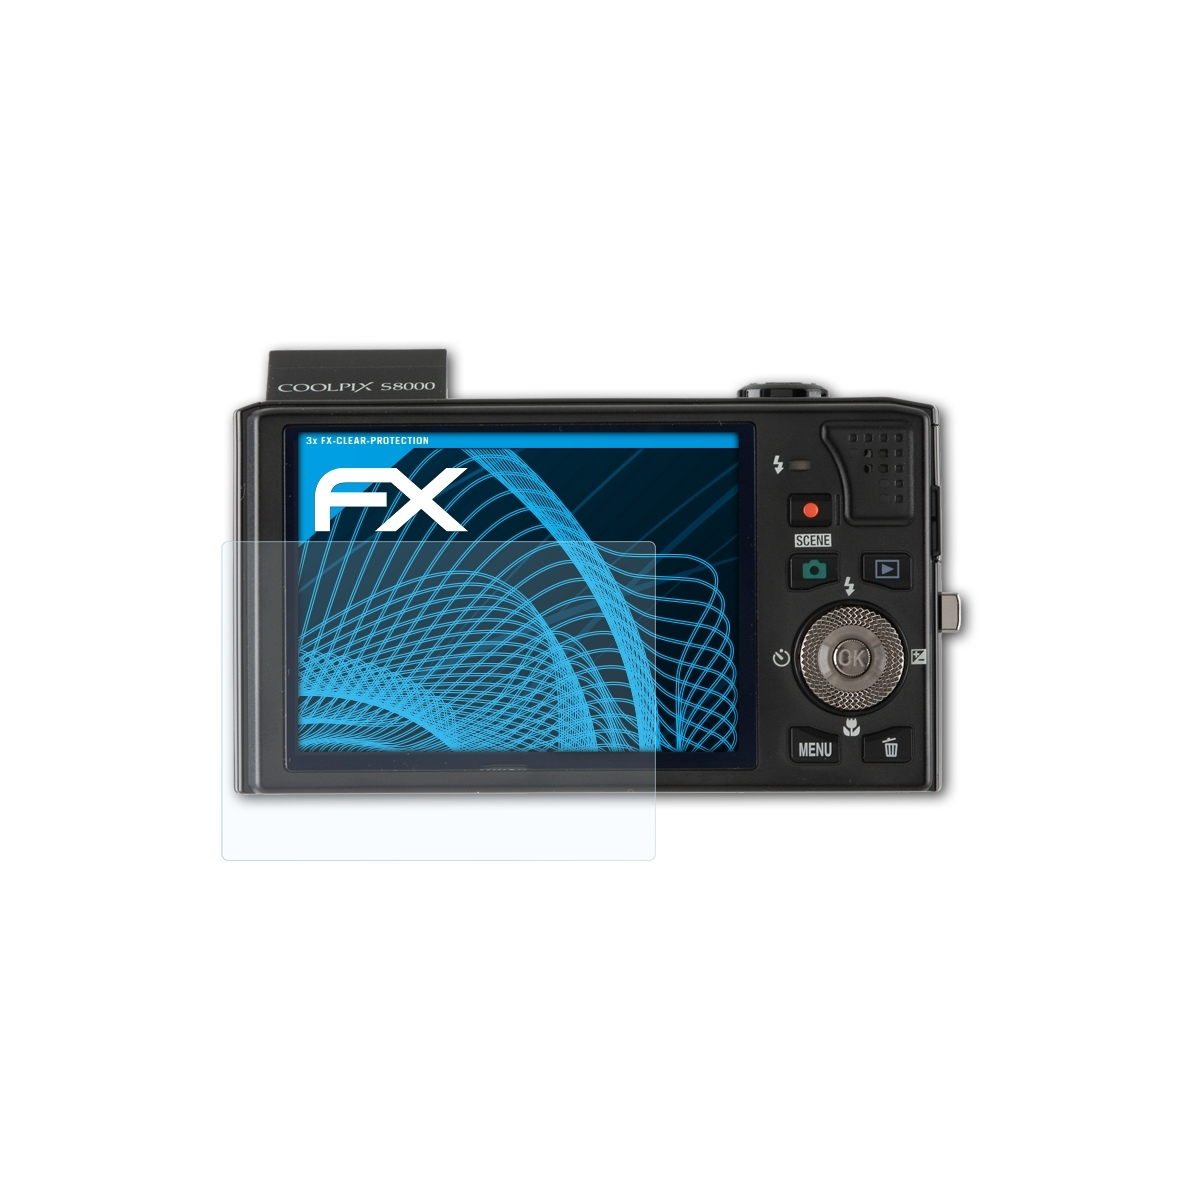 ATFOLIX 3x FX-Clear Displayschutz(für Nikon S8000) Coolpix